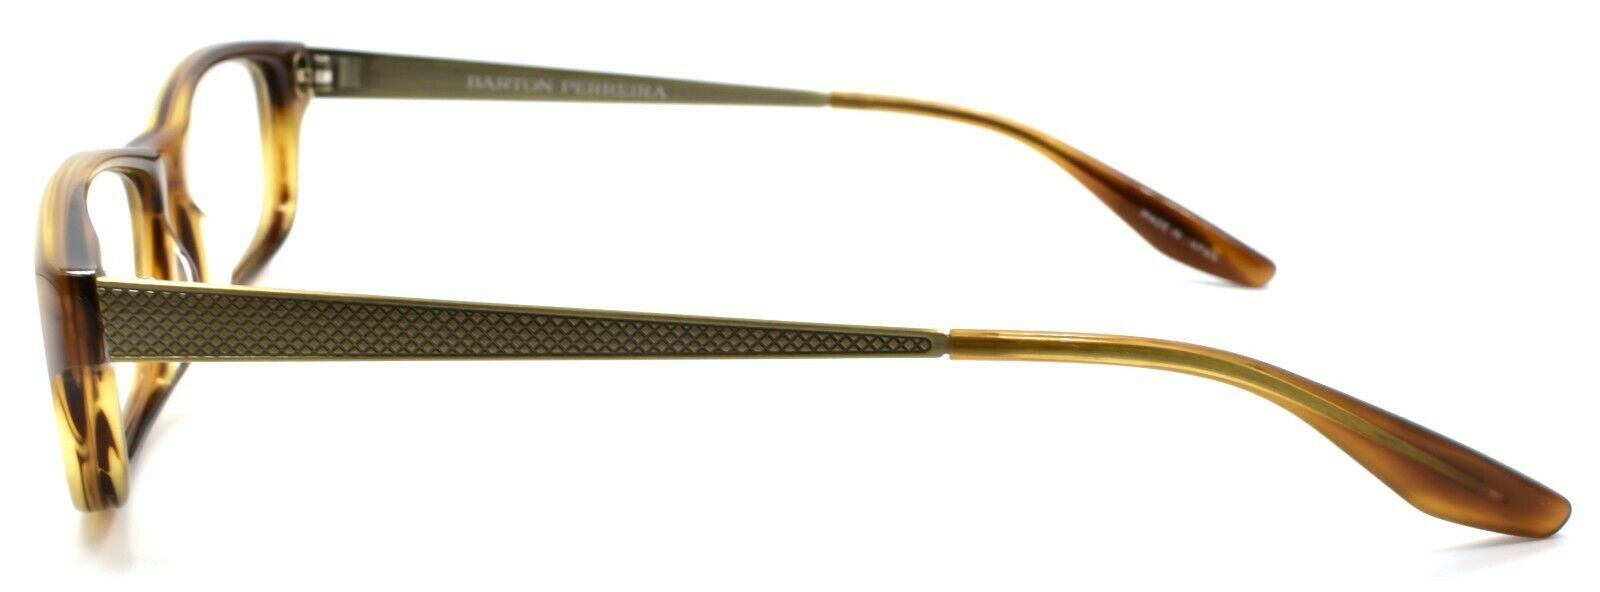 3-Barton Perreira Nickelas Men's Eyeglasses Frames 53-17-145 Umber Tortoise-672263039051-IKSpecs